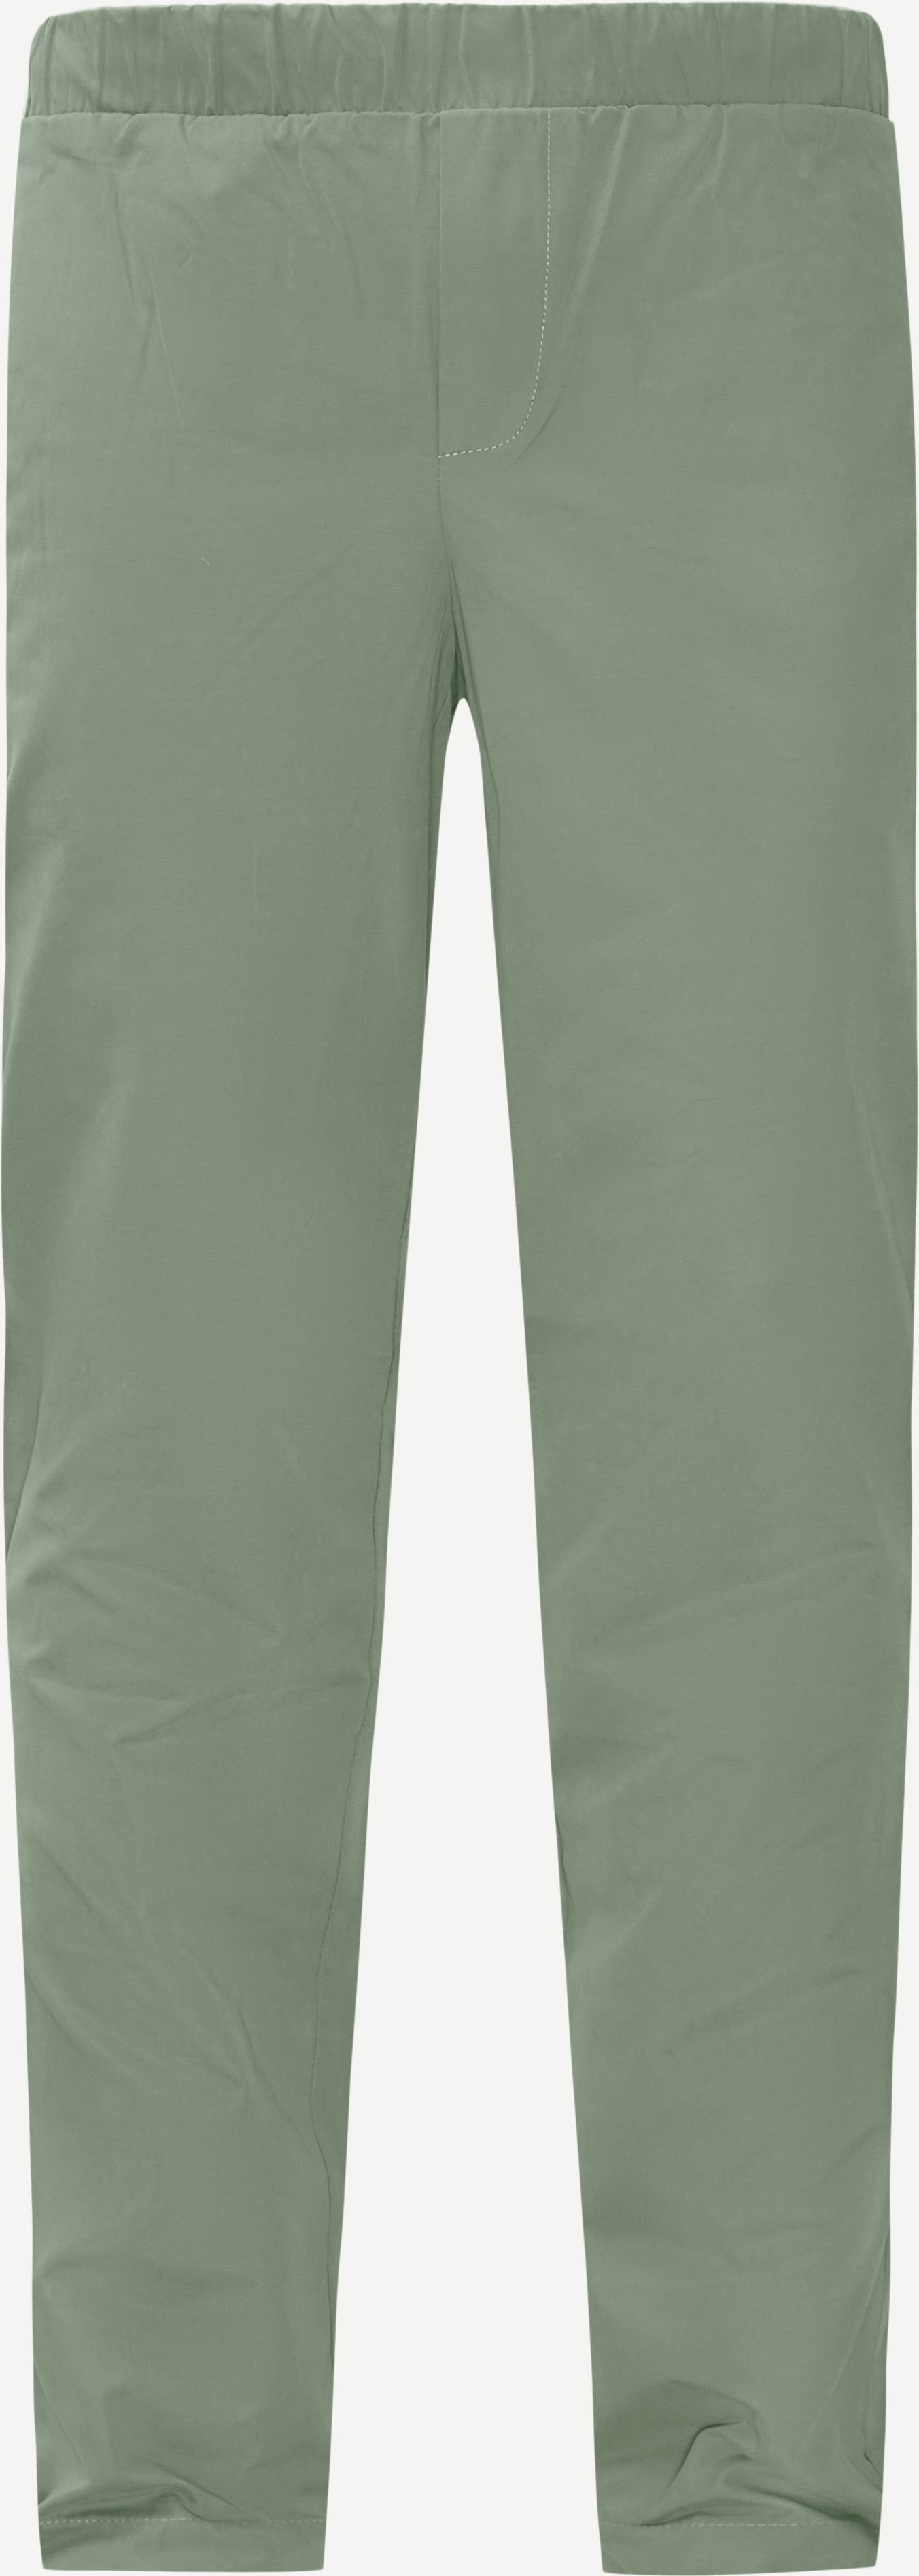 Ric Clark Pants - Bukser - Regular fit - Grøn